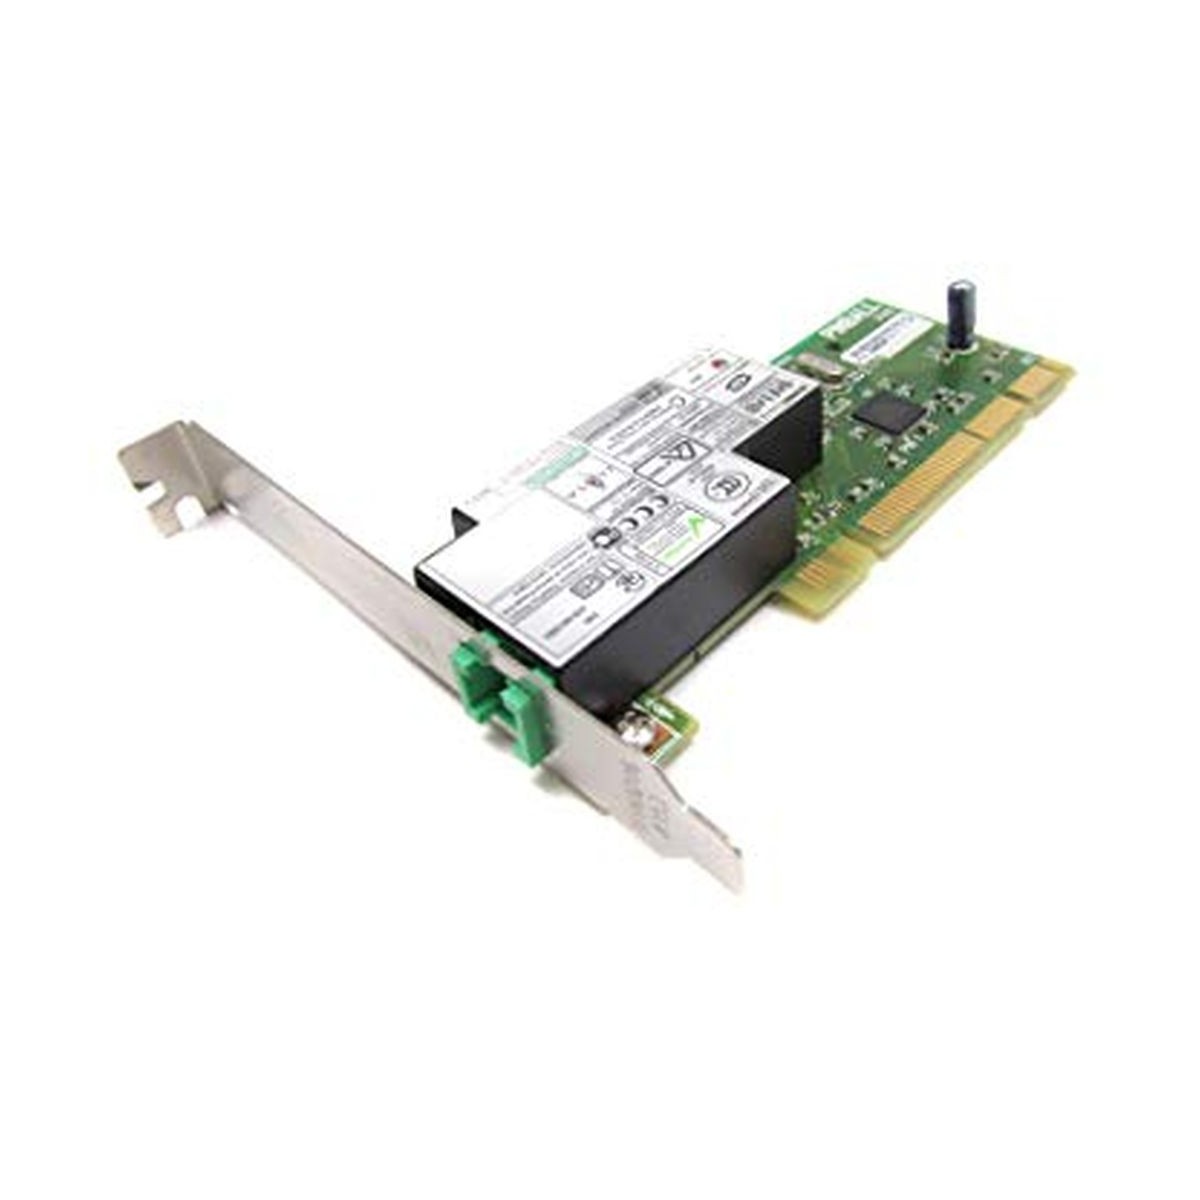 FAX MODEM AGERE PINBALL P40 D-1156i PCI